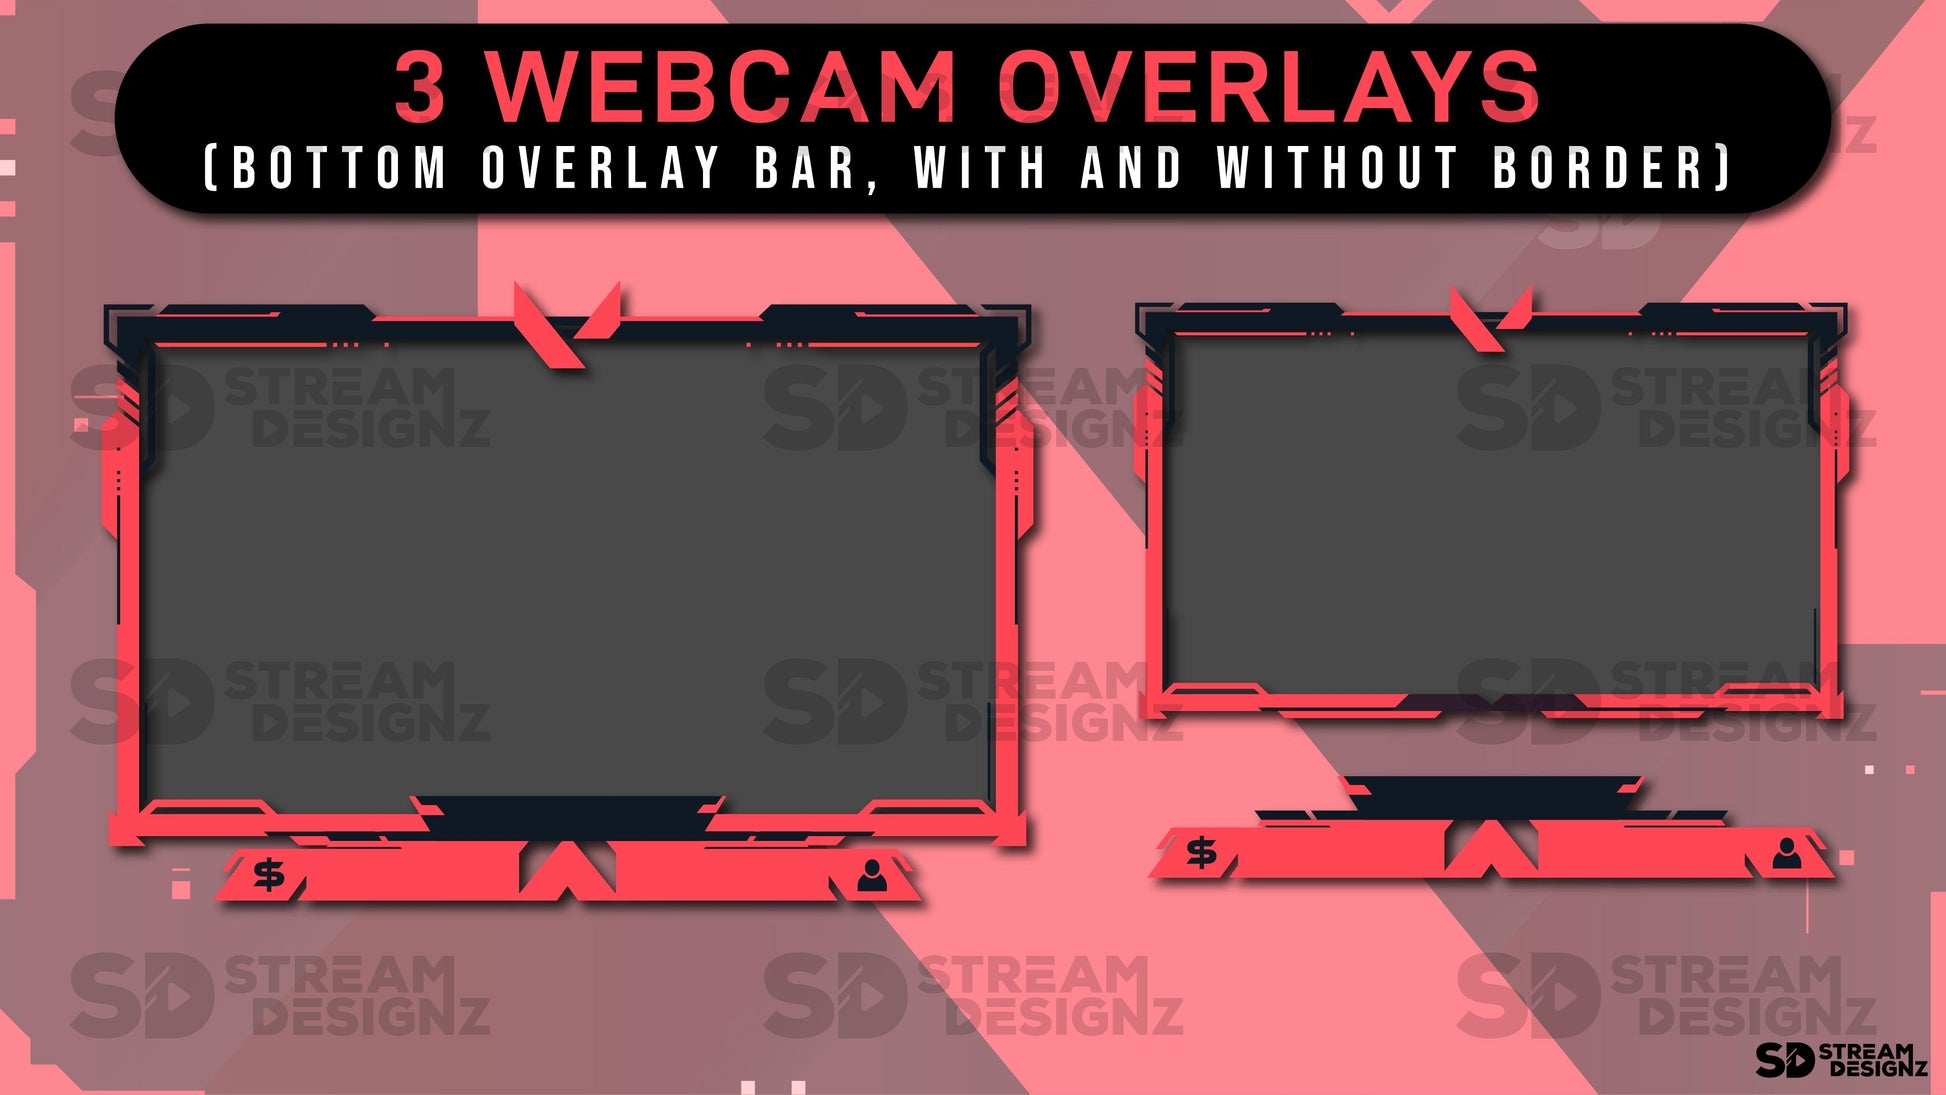 static stream overlay package - ace - webcam overlays - stream designz